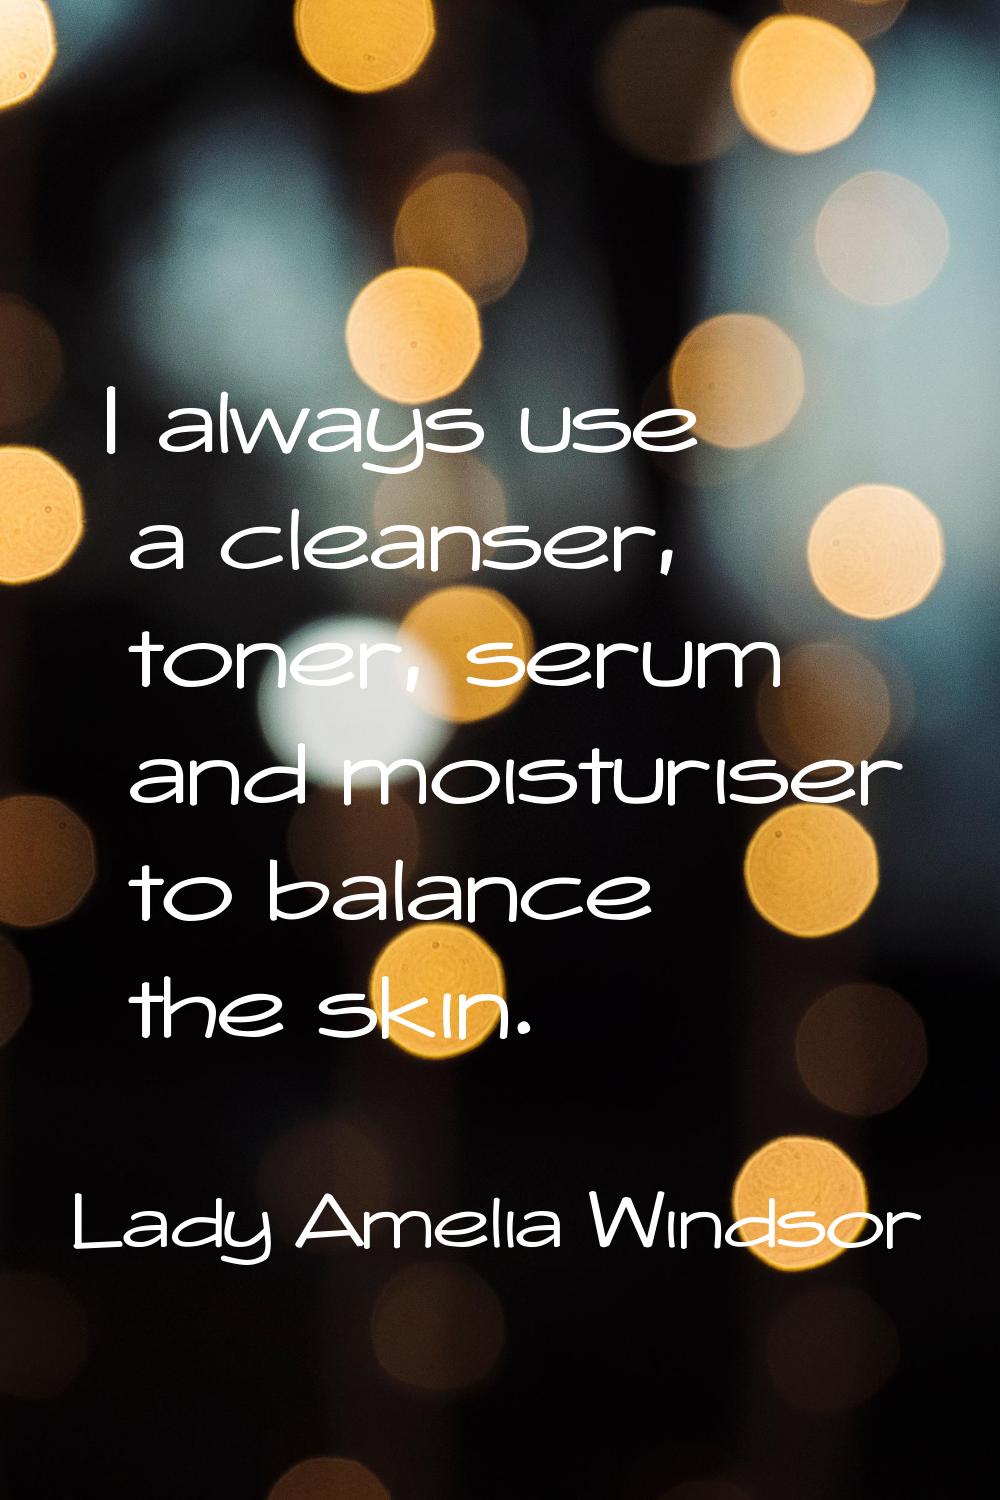 I always use a cleanser, toner, serum and moisturiser to balance the skin.